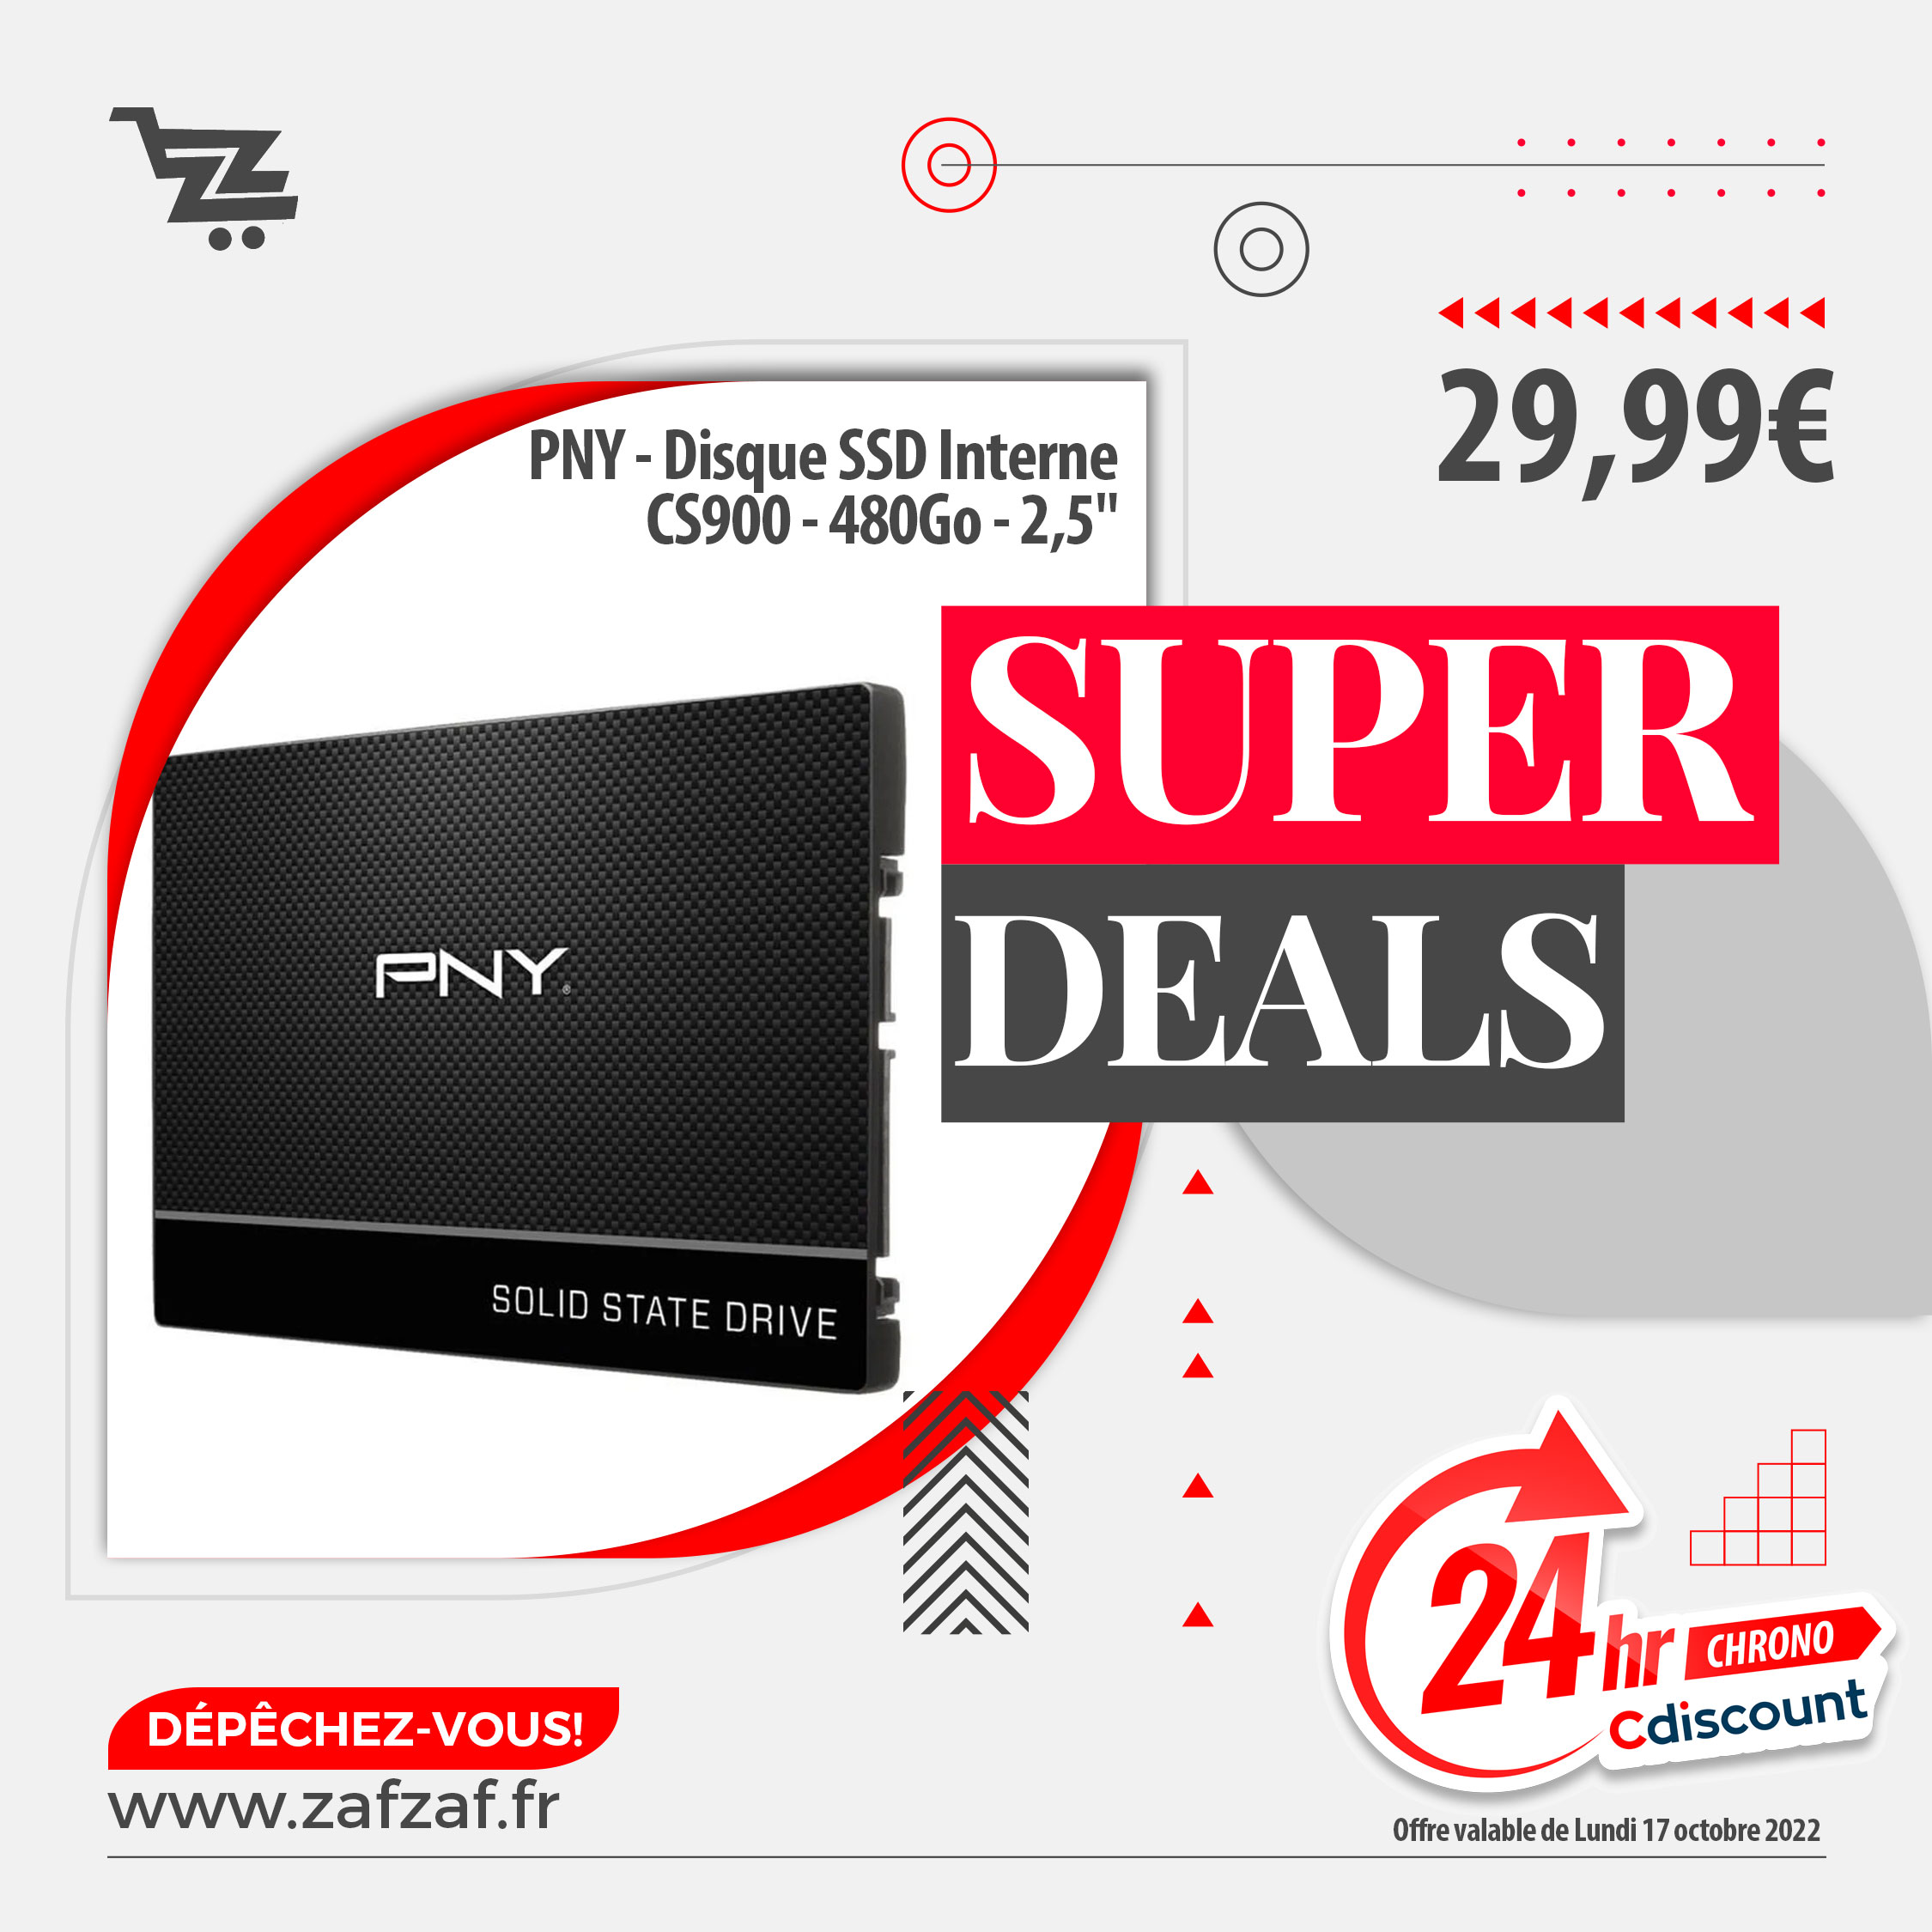 PNY - Disque SSD Interne - CS900 - 480Go - 2,5"